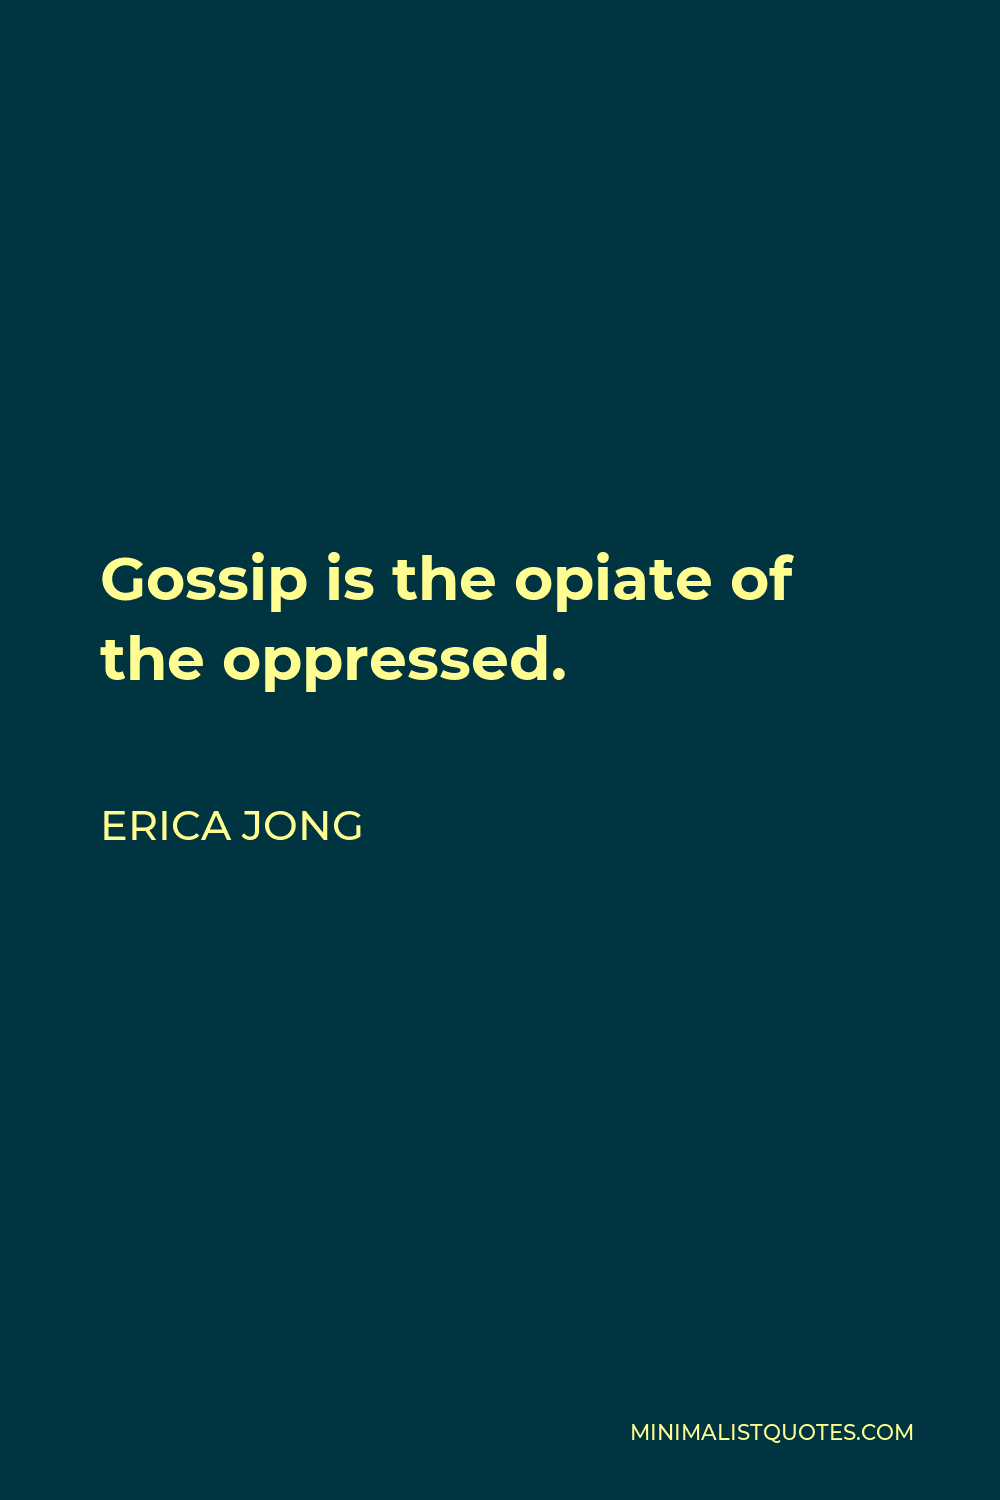 Erica Jong Quote - Gossip is the opiate of the oppressed.